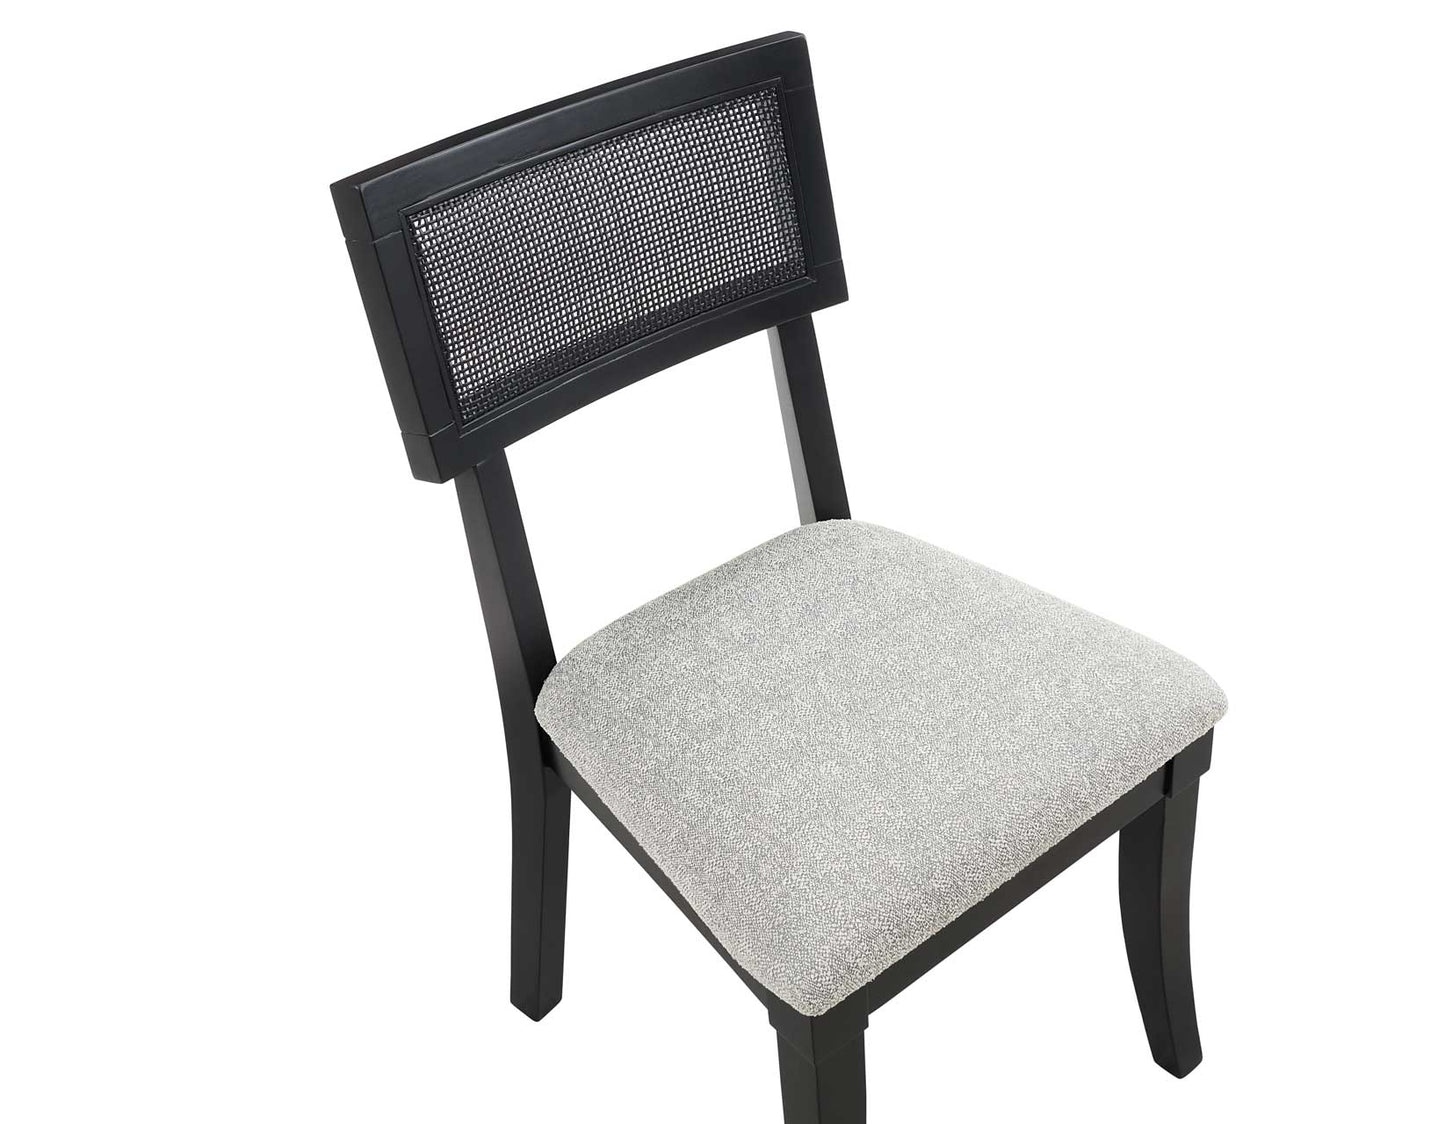 Colvin Cane Side Chair, Black